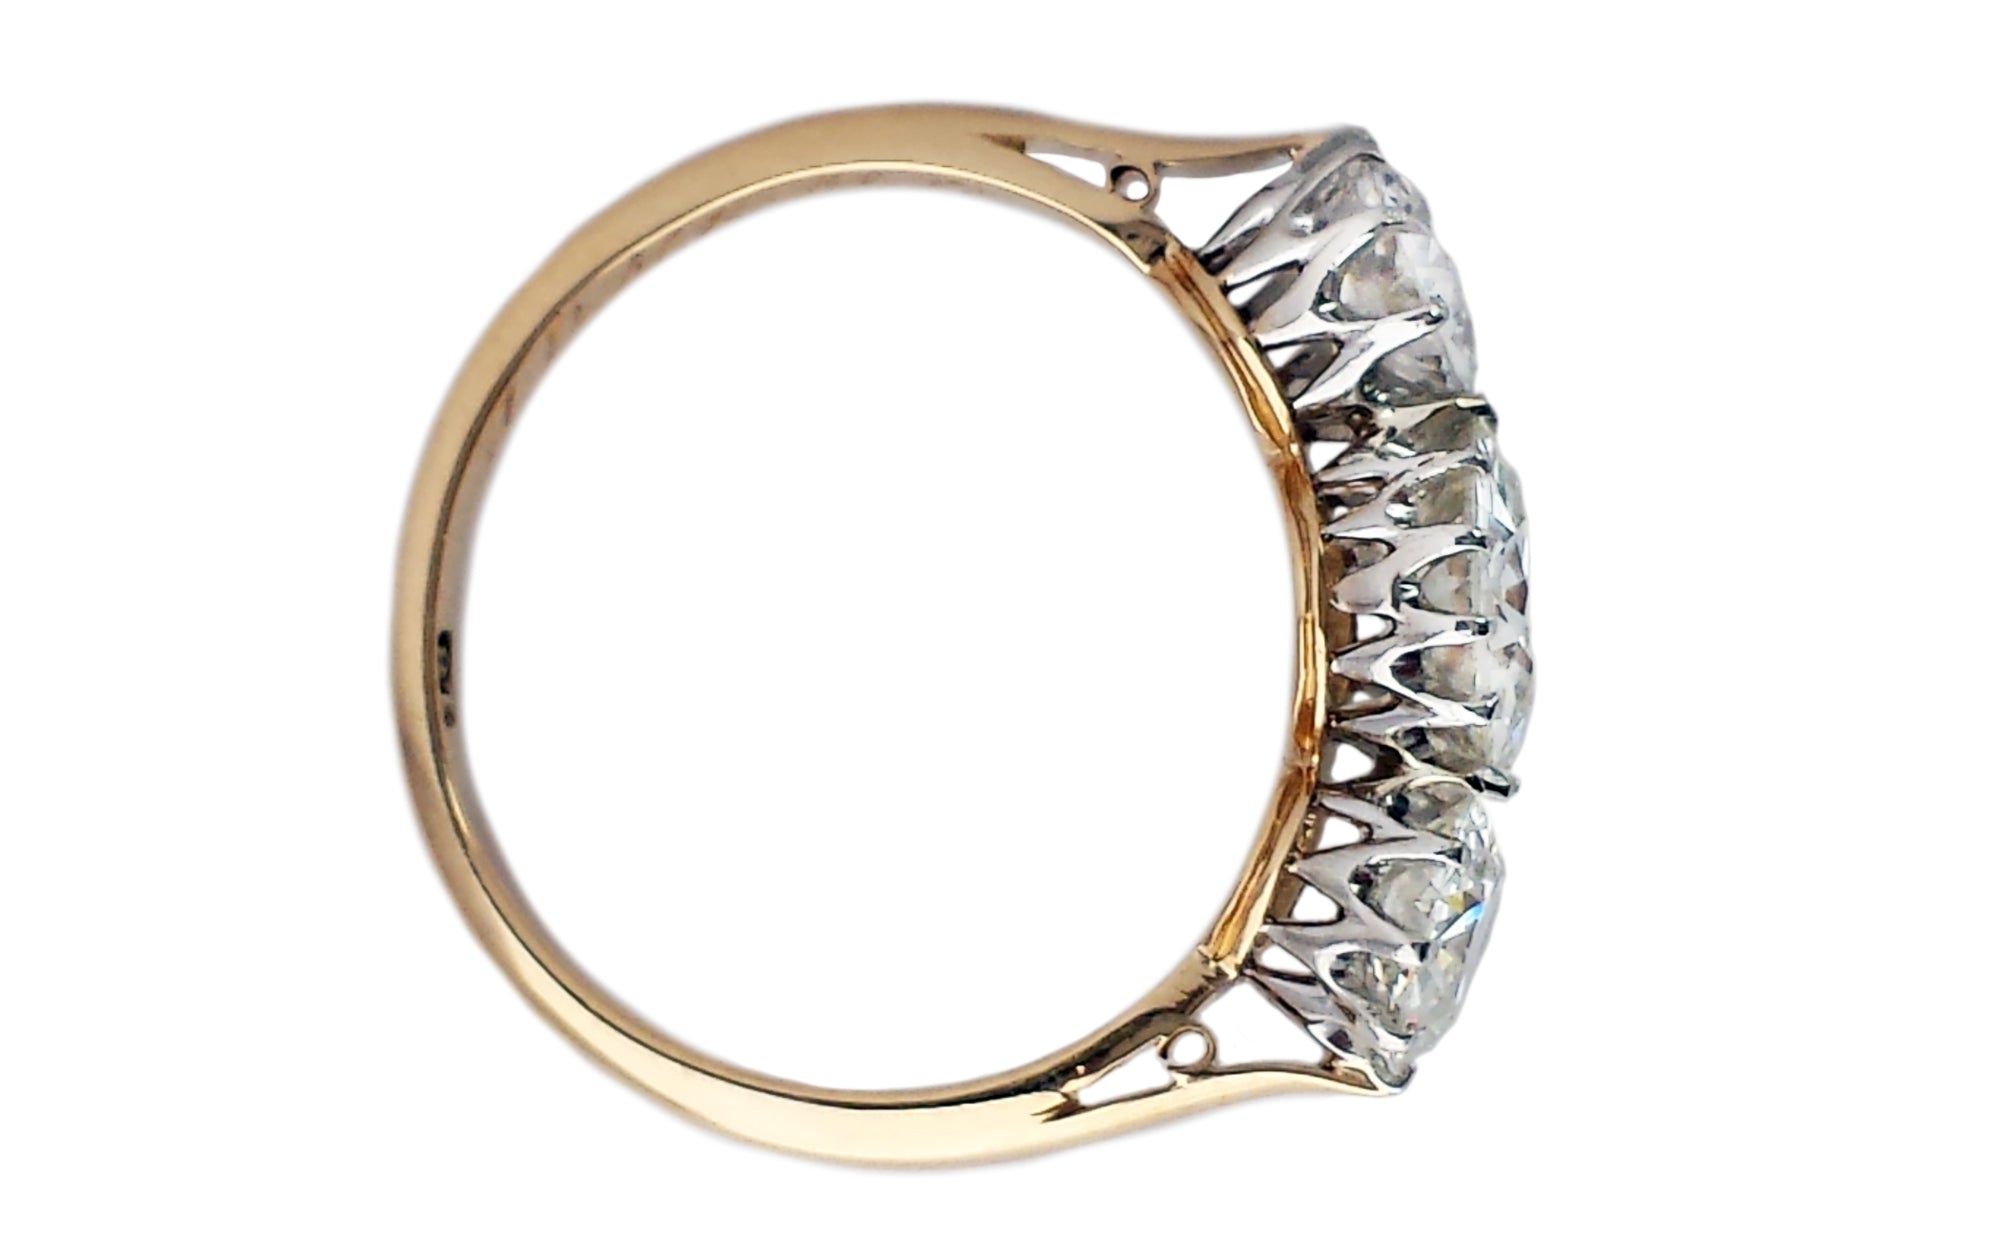 Antique 1920s 3-Stone 1.90tcw J/VS1 Old European Cut Diamond Engagement Ring